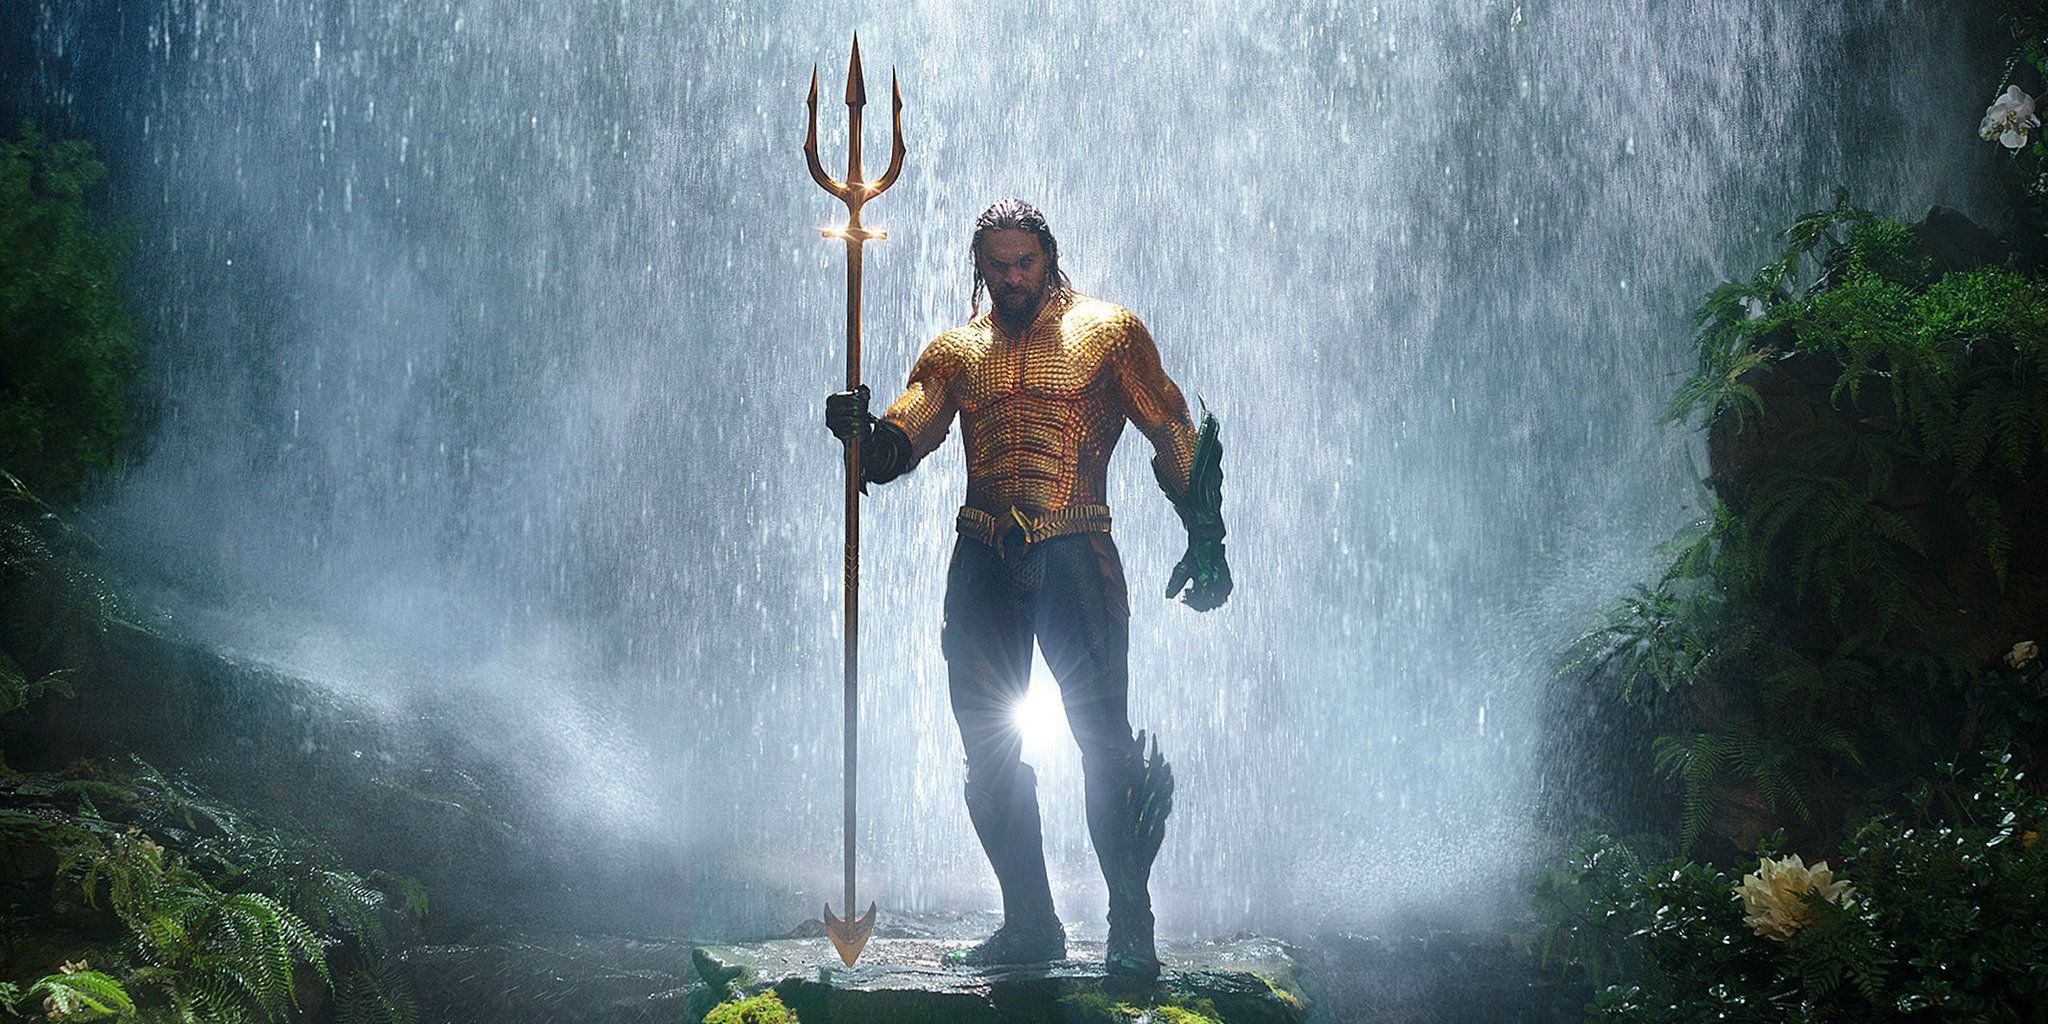 Jason Momoa in the classic Aquaman costume